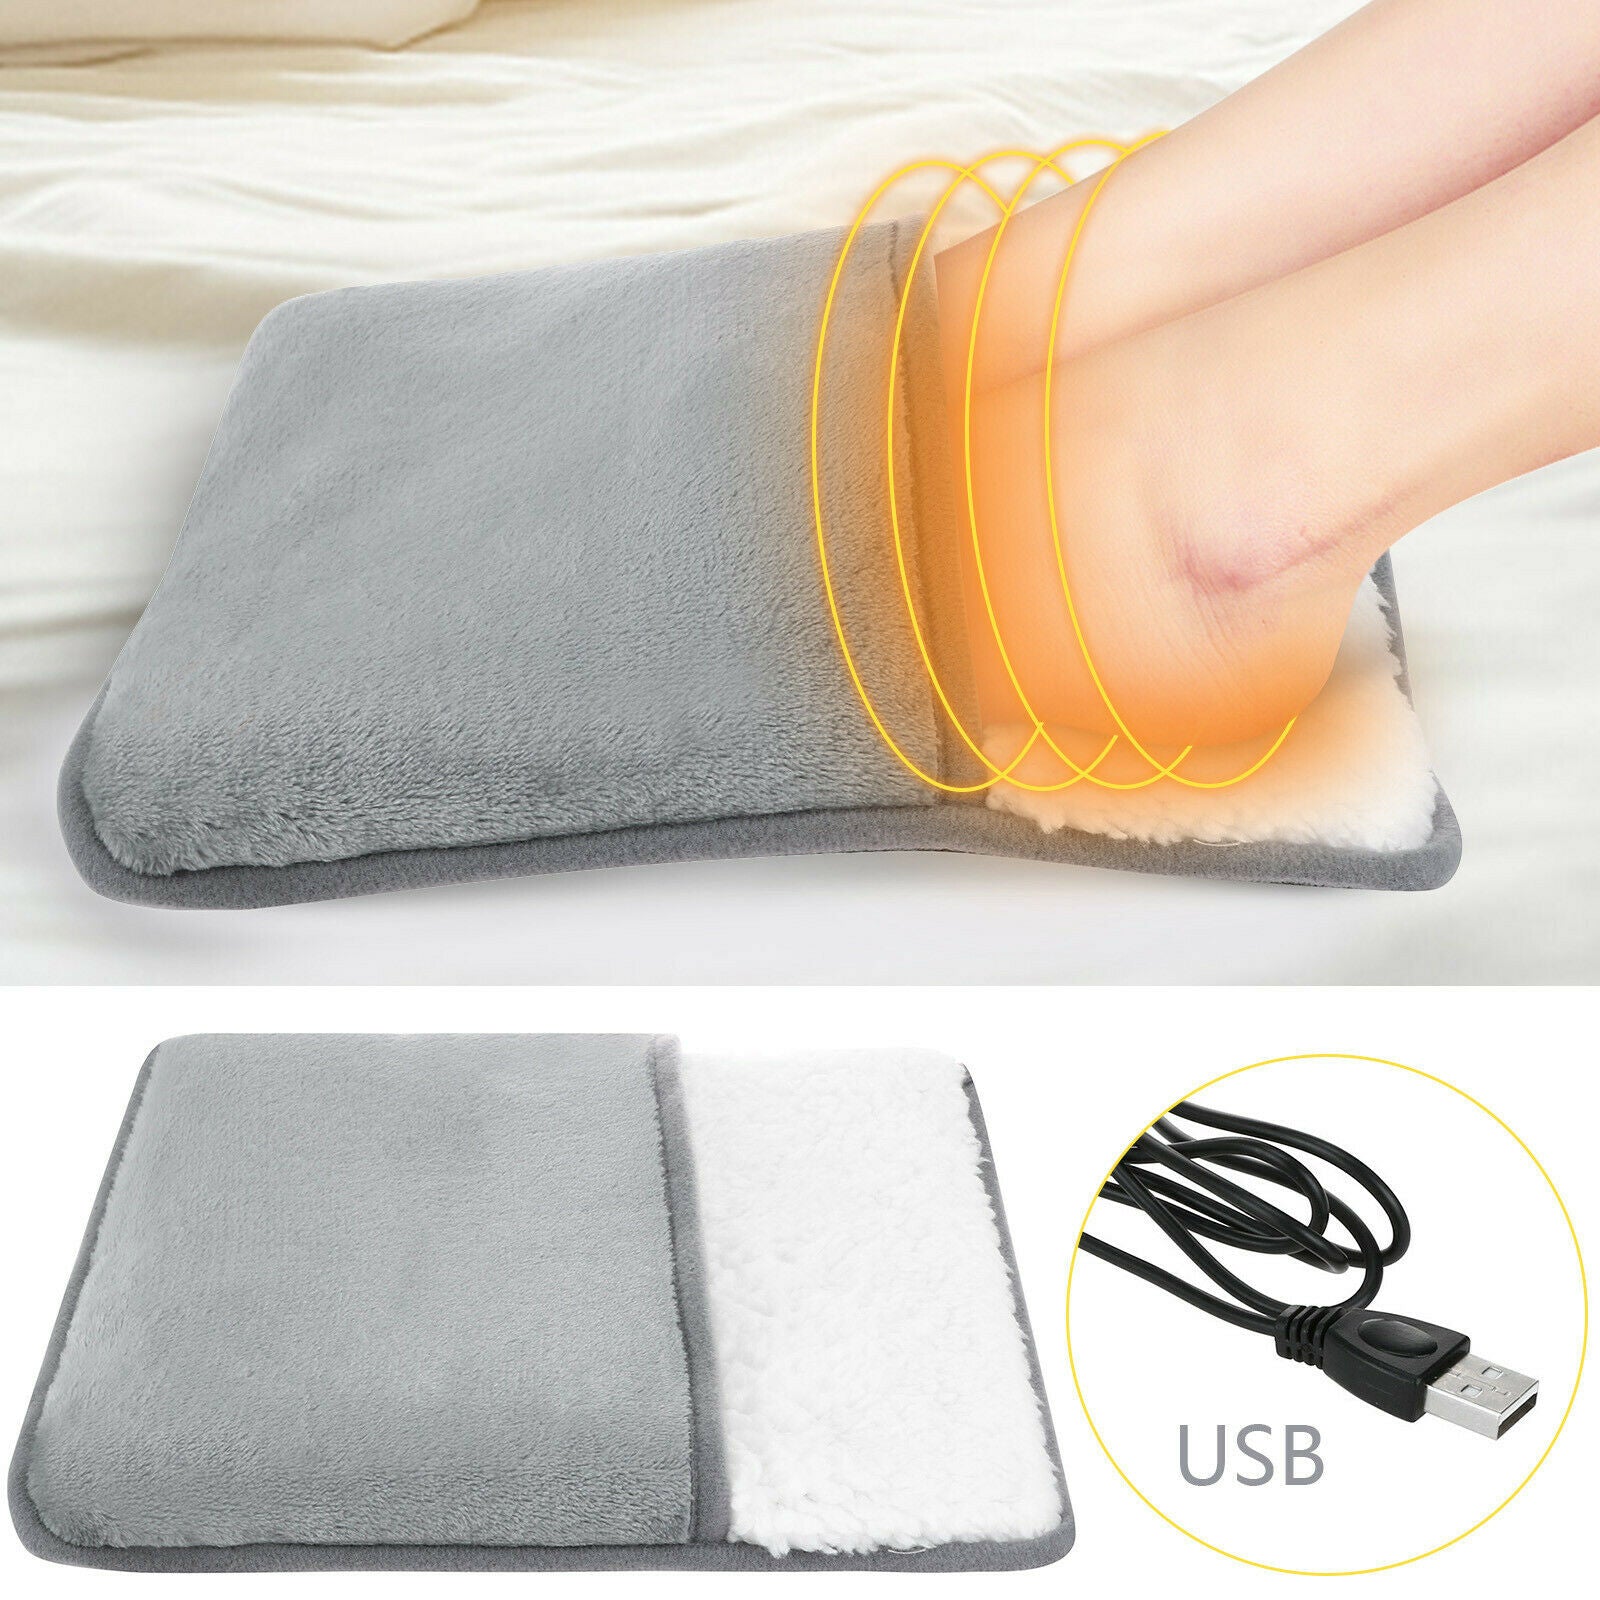 hOT USB Electric Heating Pad Feet Warm Slippers Winter Hand/Foot Warmer Washable